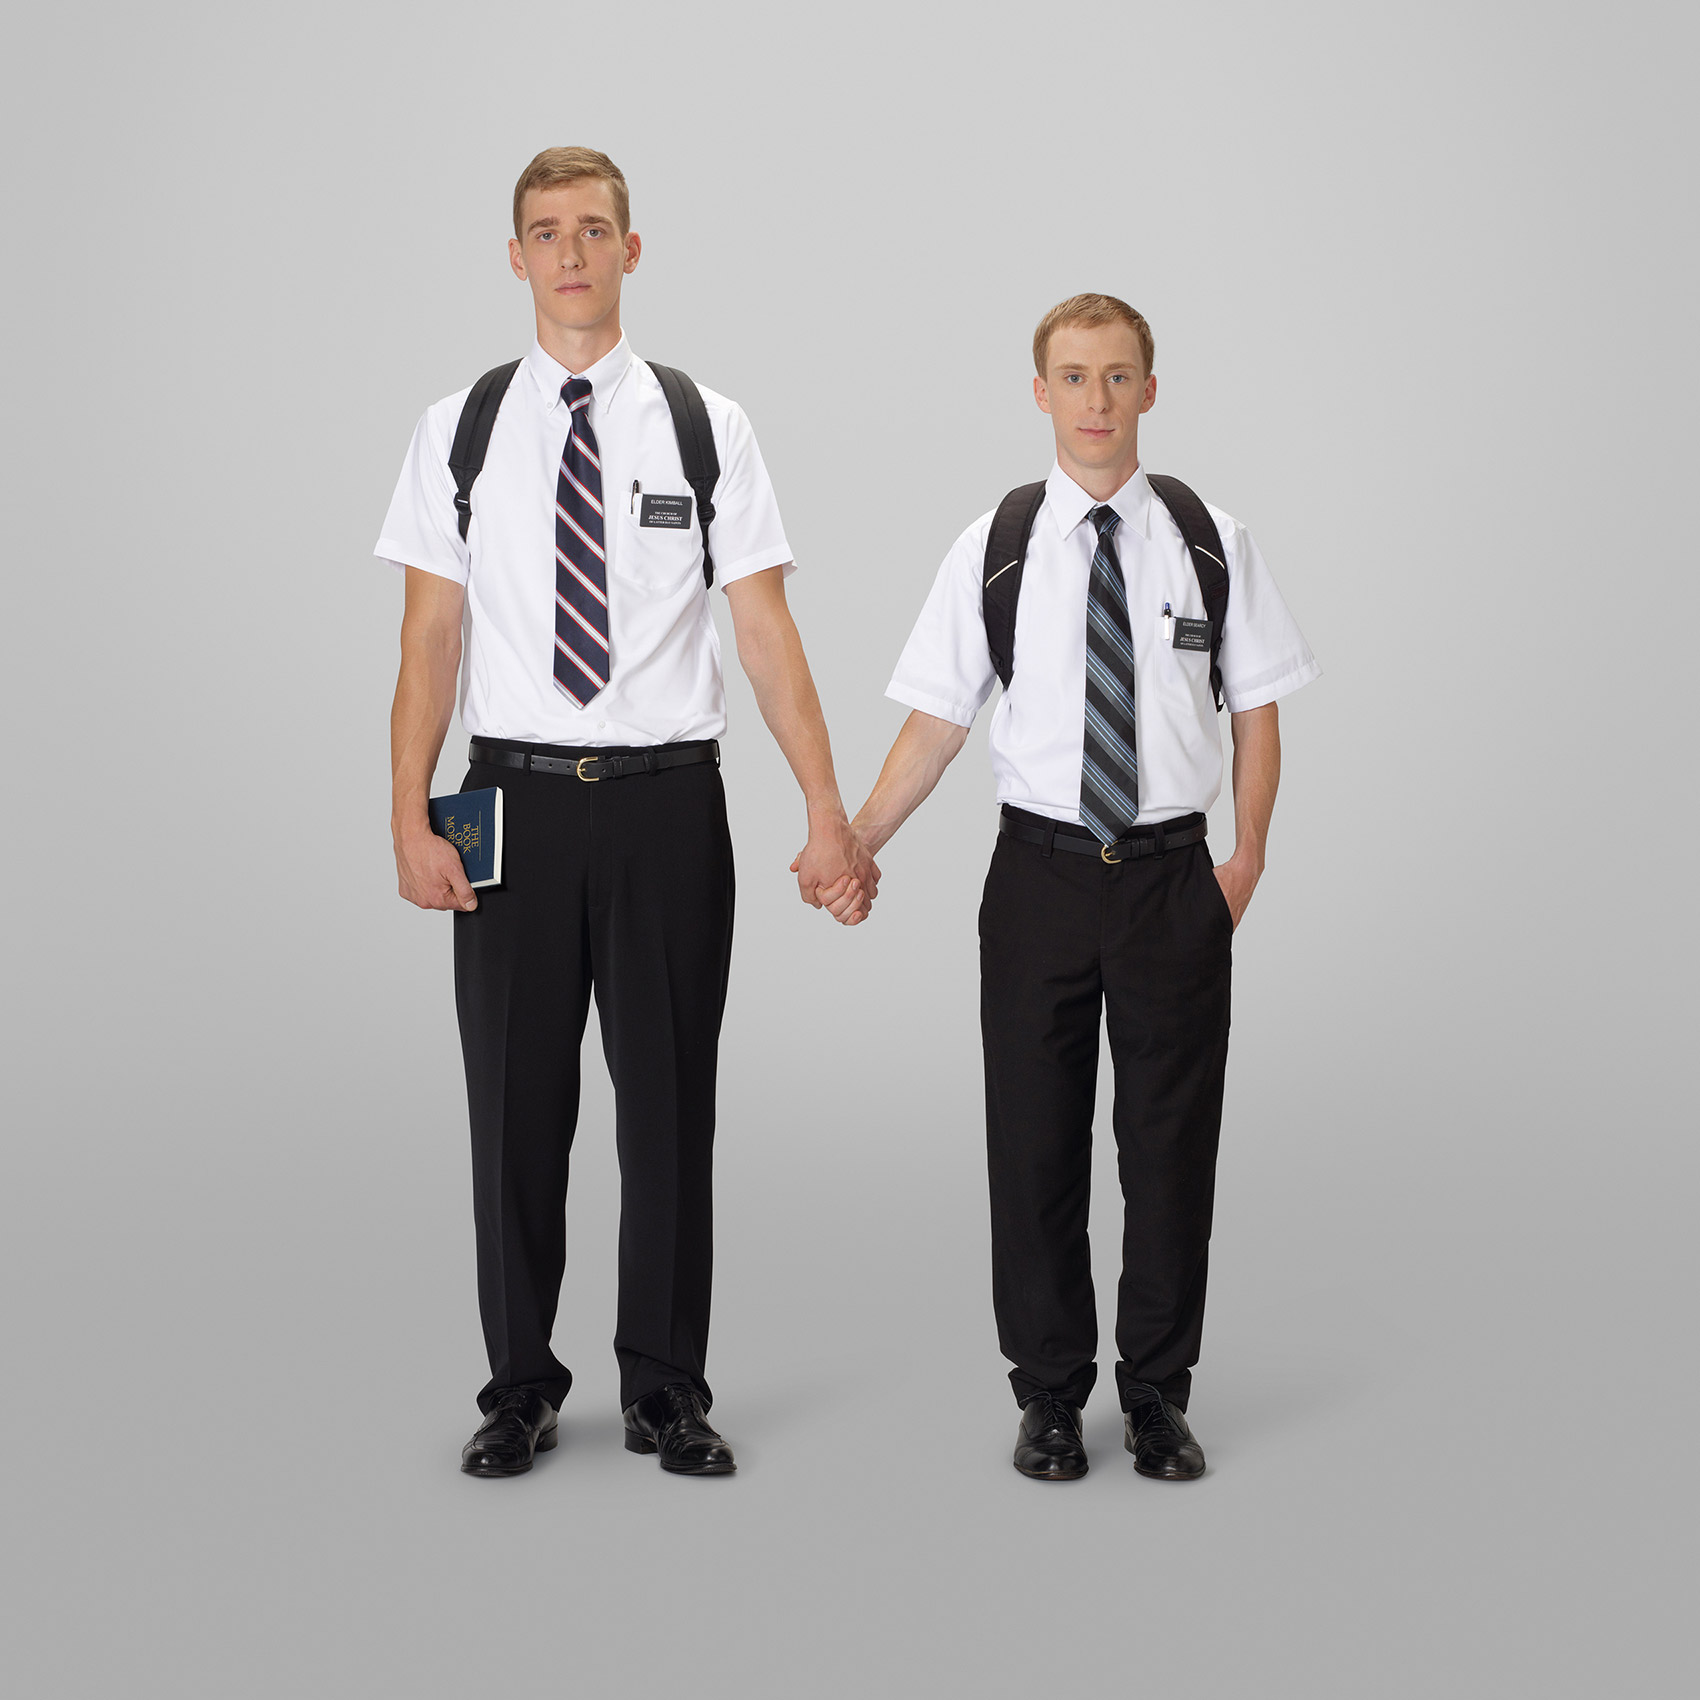 Mormon_Missionary_Positions_Neil_DaCosta_4.jpg